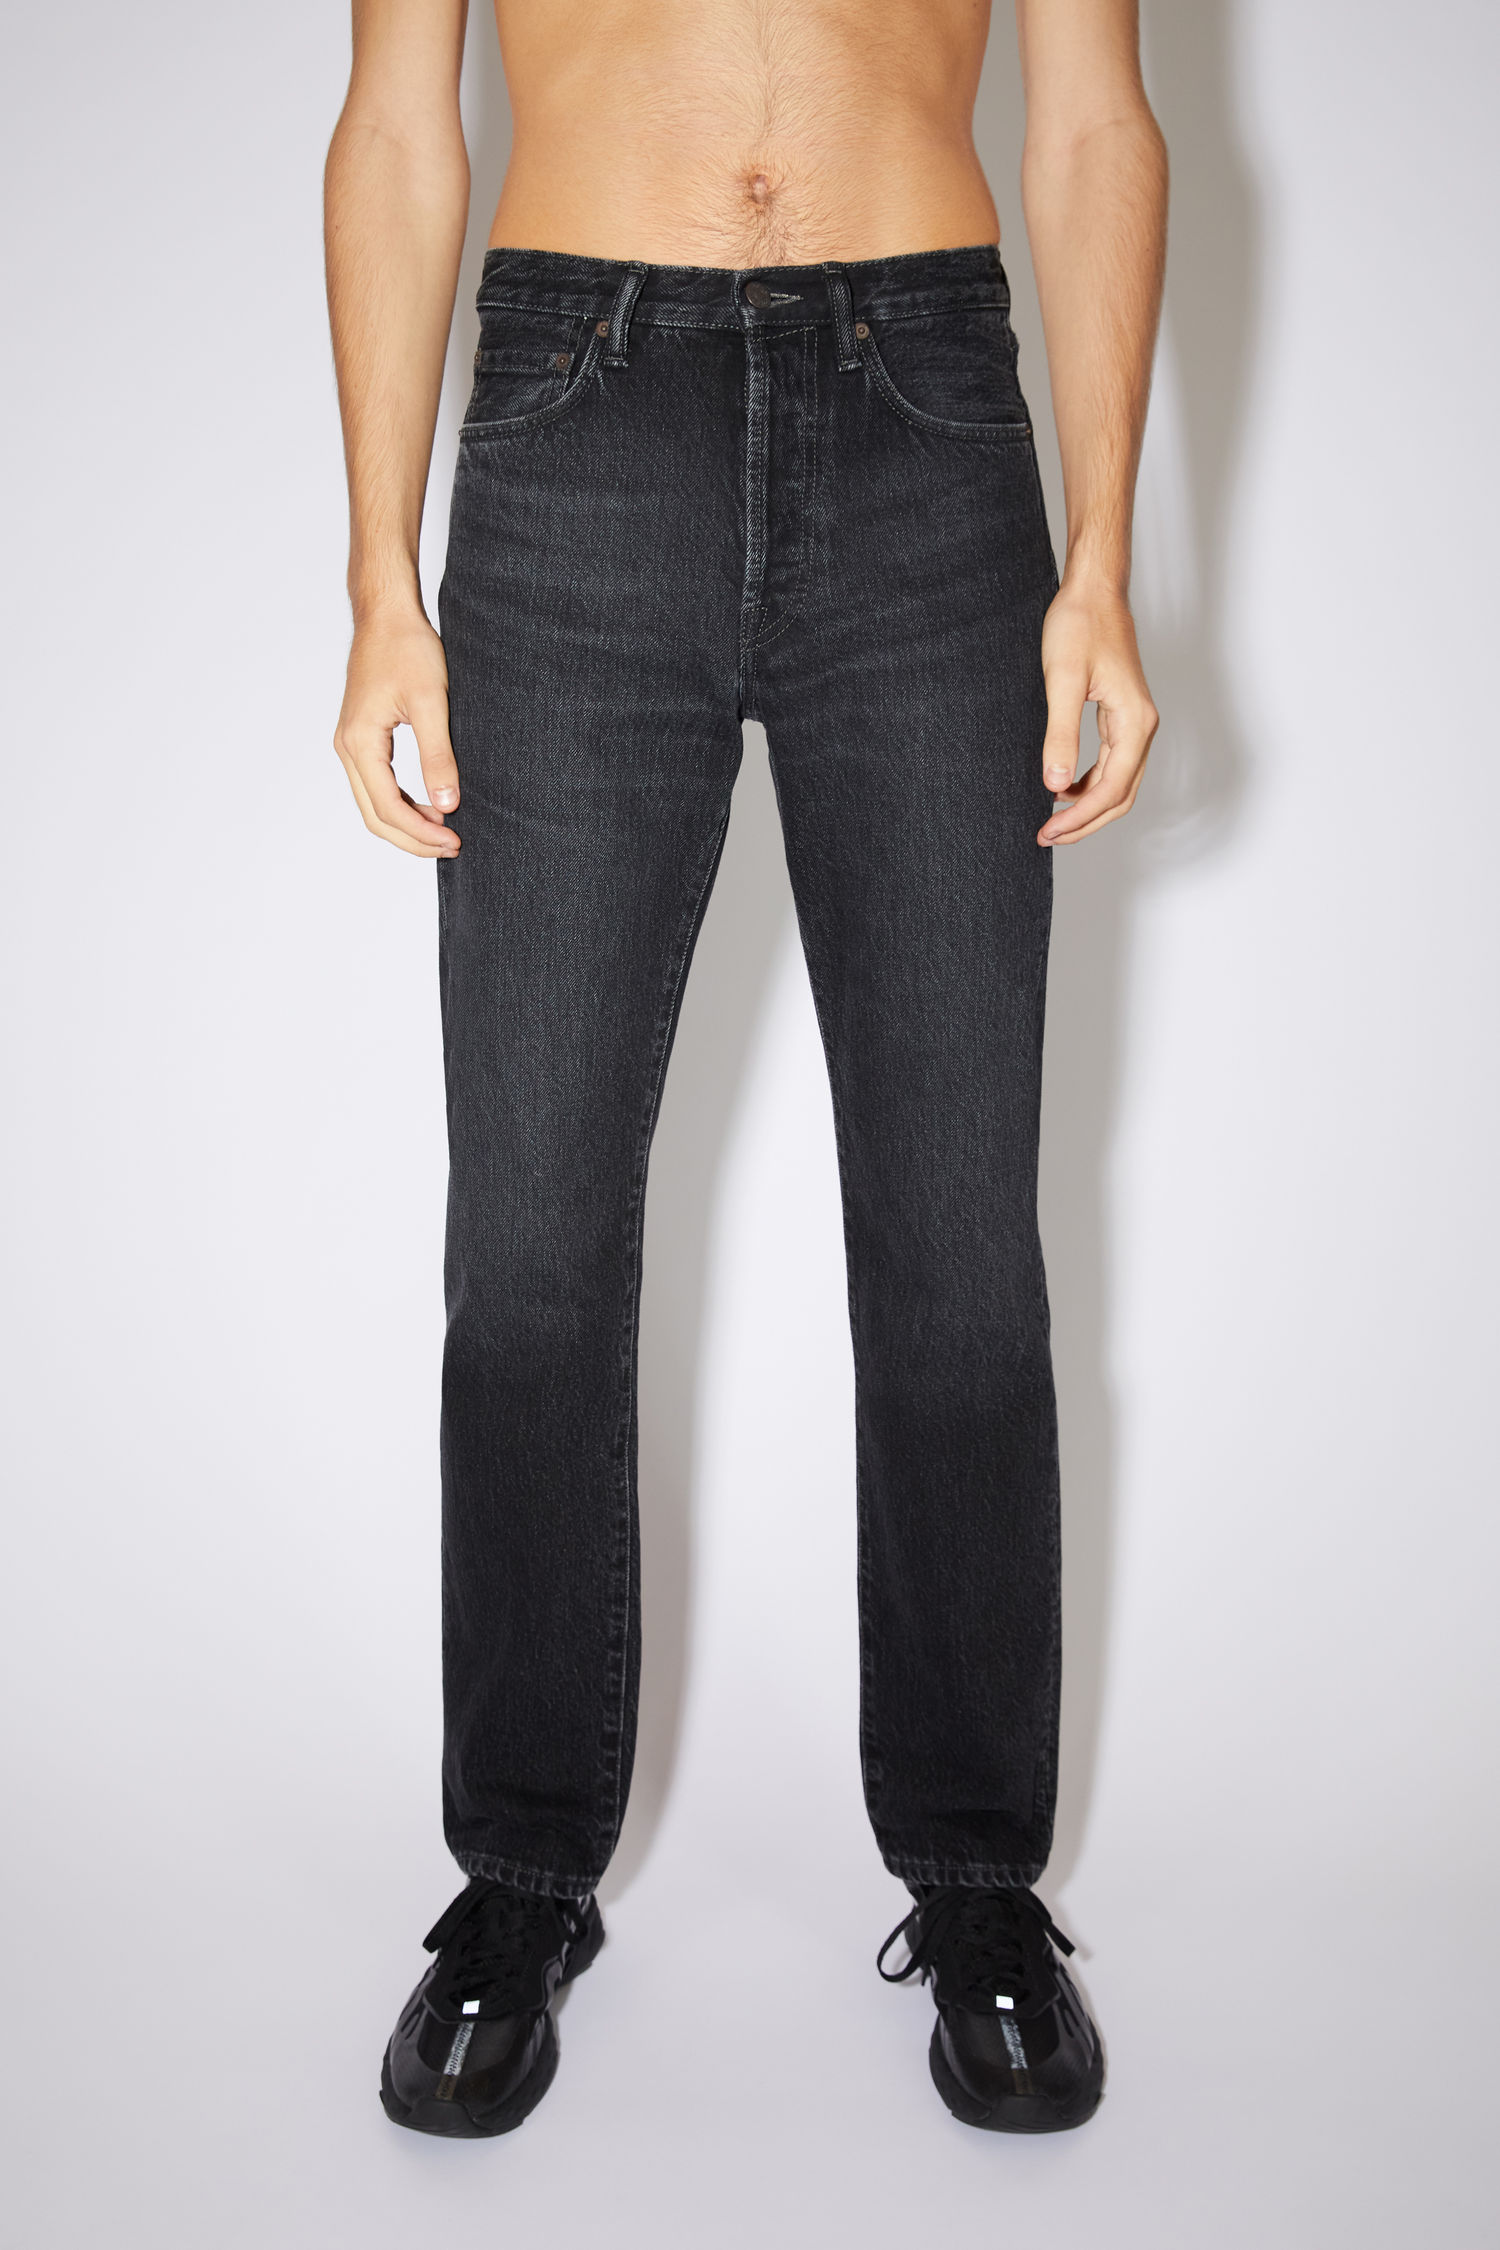 legering metodologi klodset Acne Studios - Straight fit jeans - Black